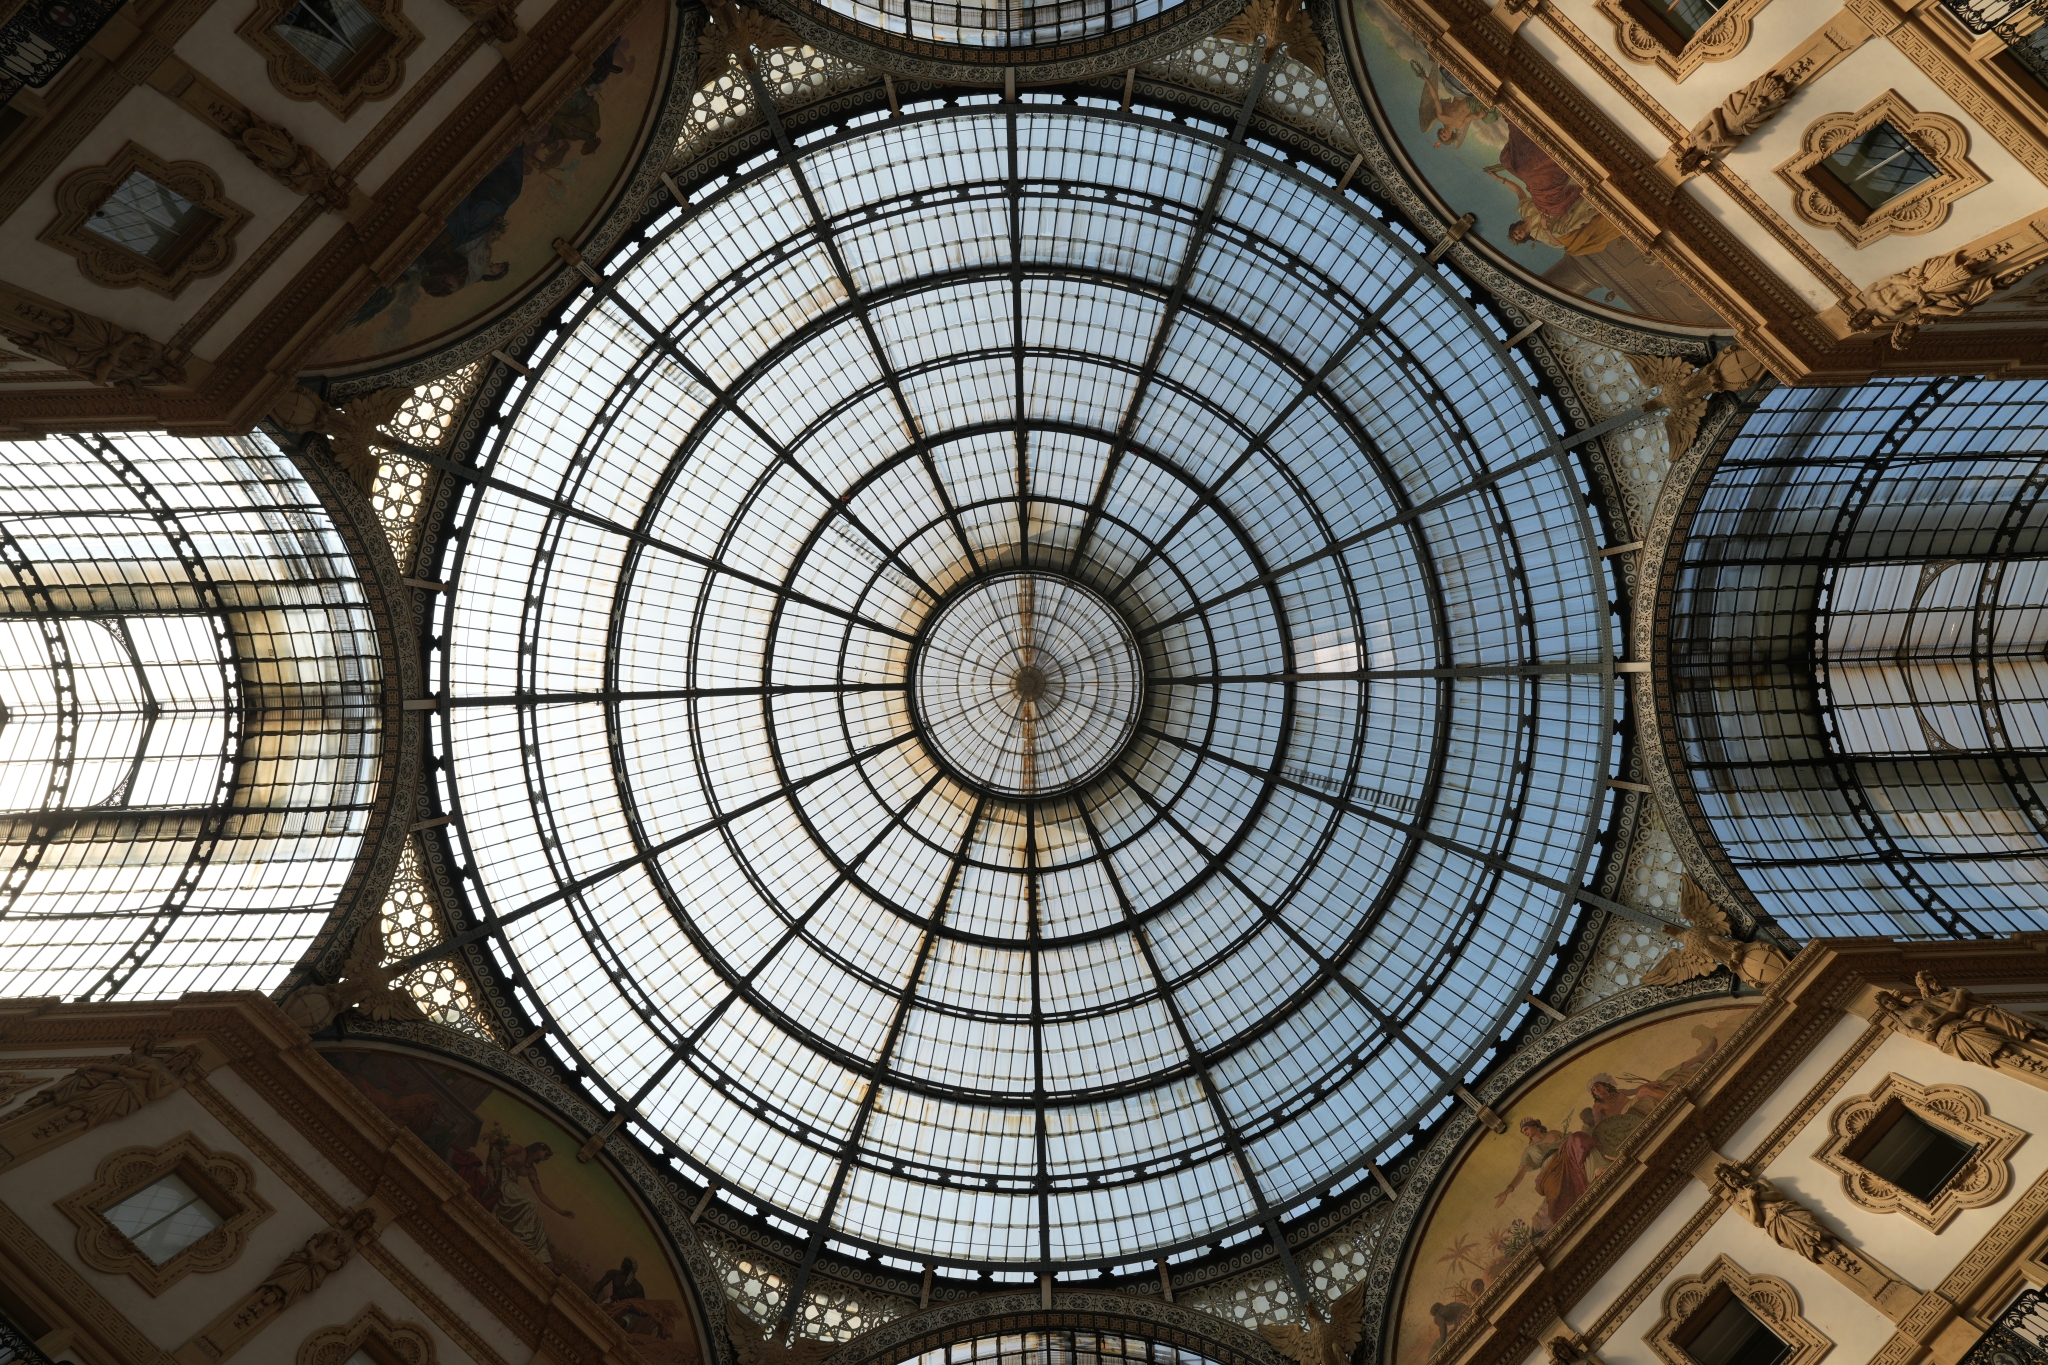 Upward shot of a circular glass ceiling